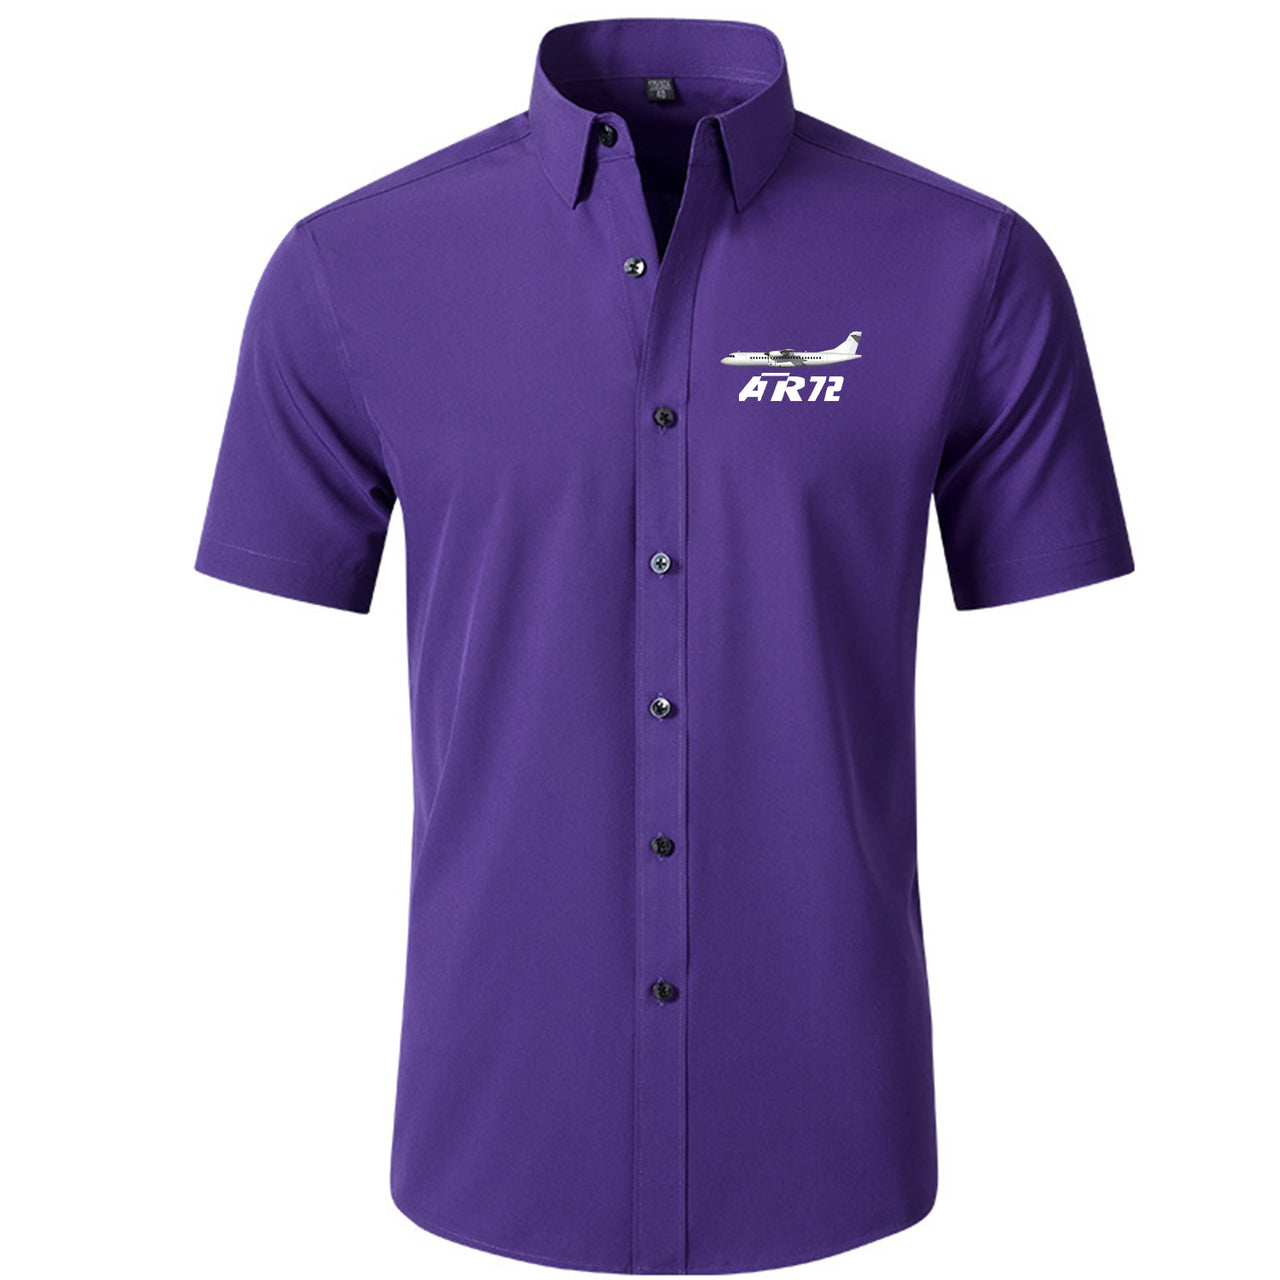 The ATR72 Designed Short Sleeve Shirts